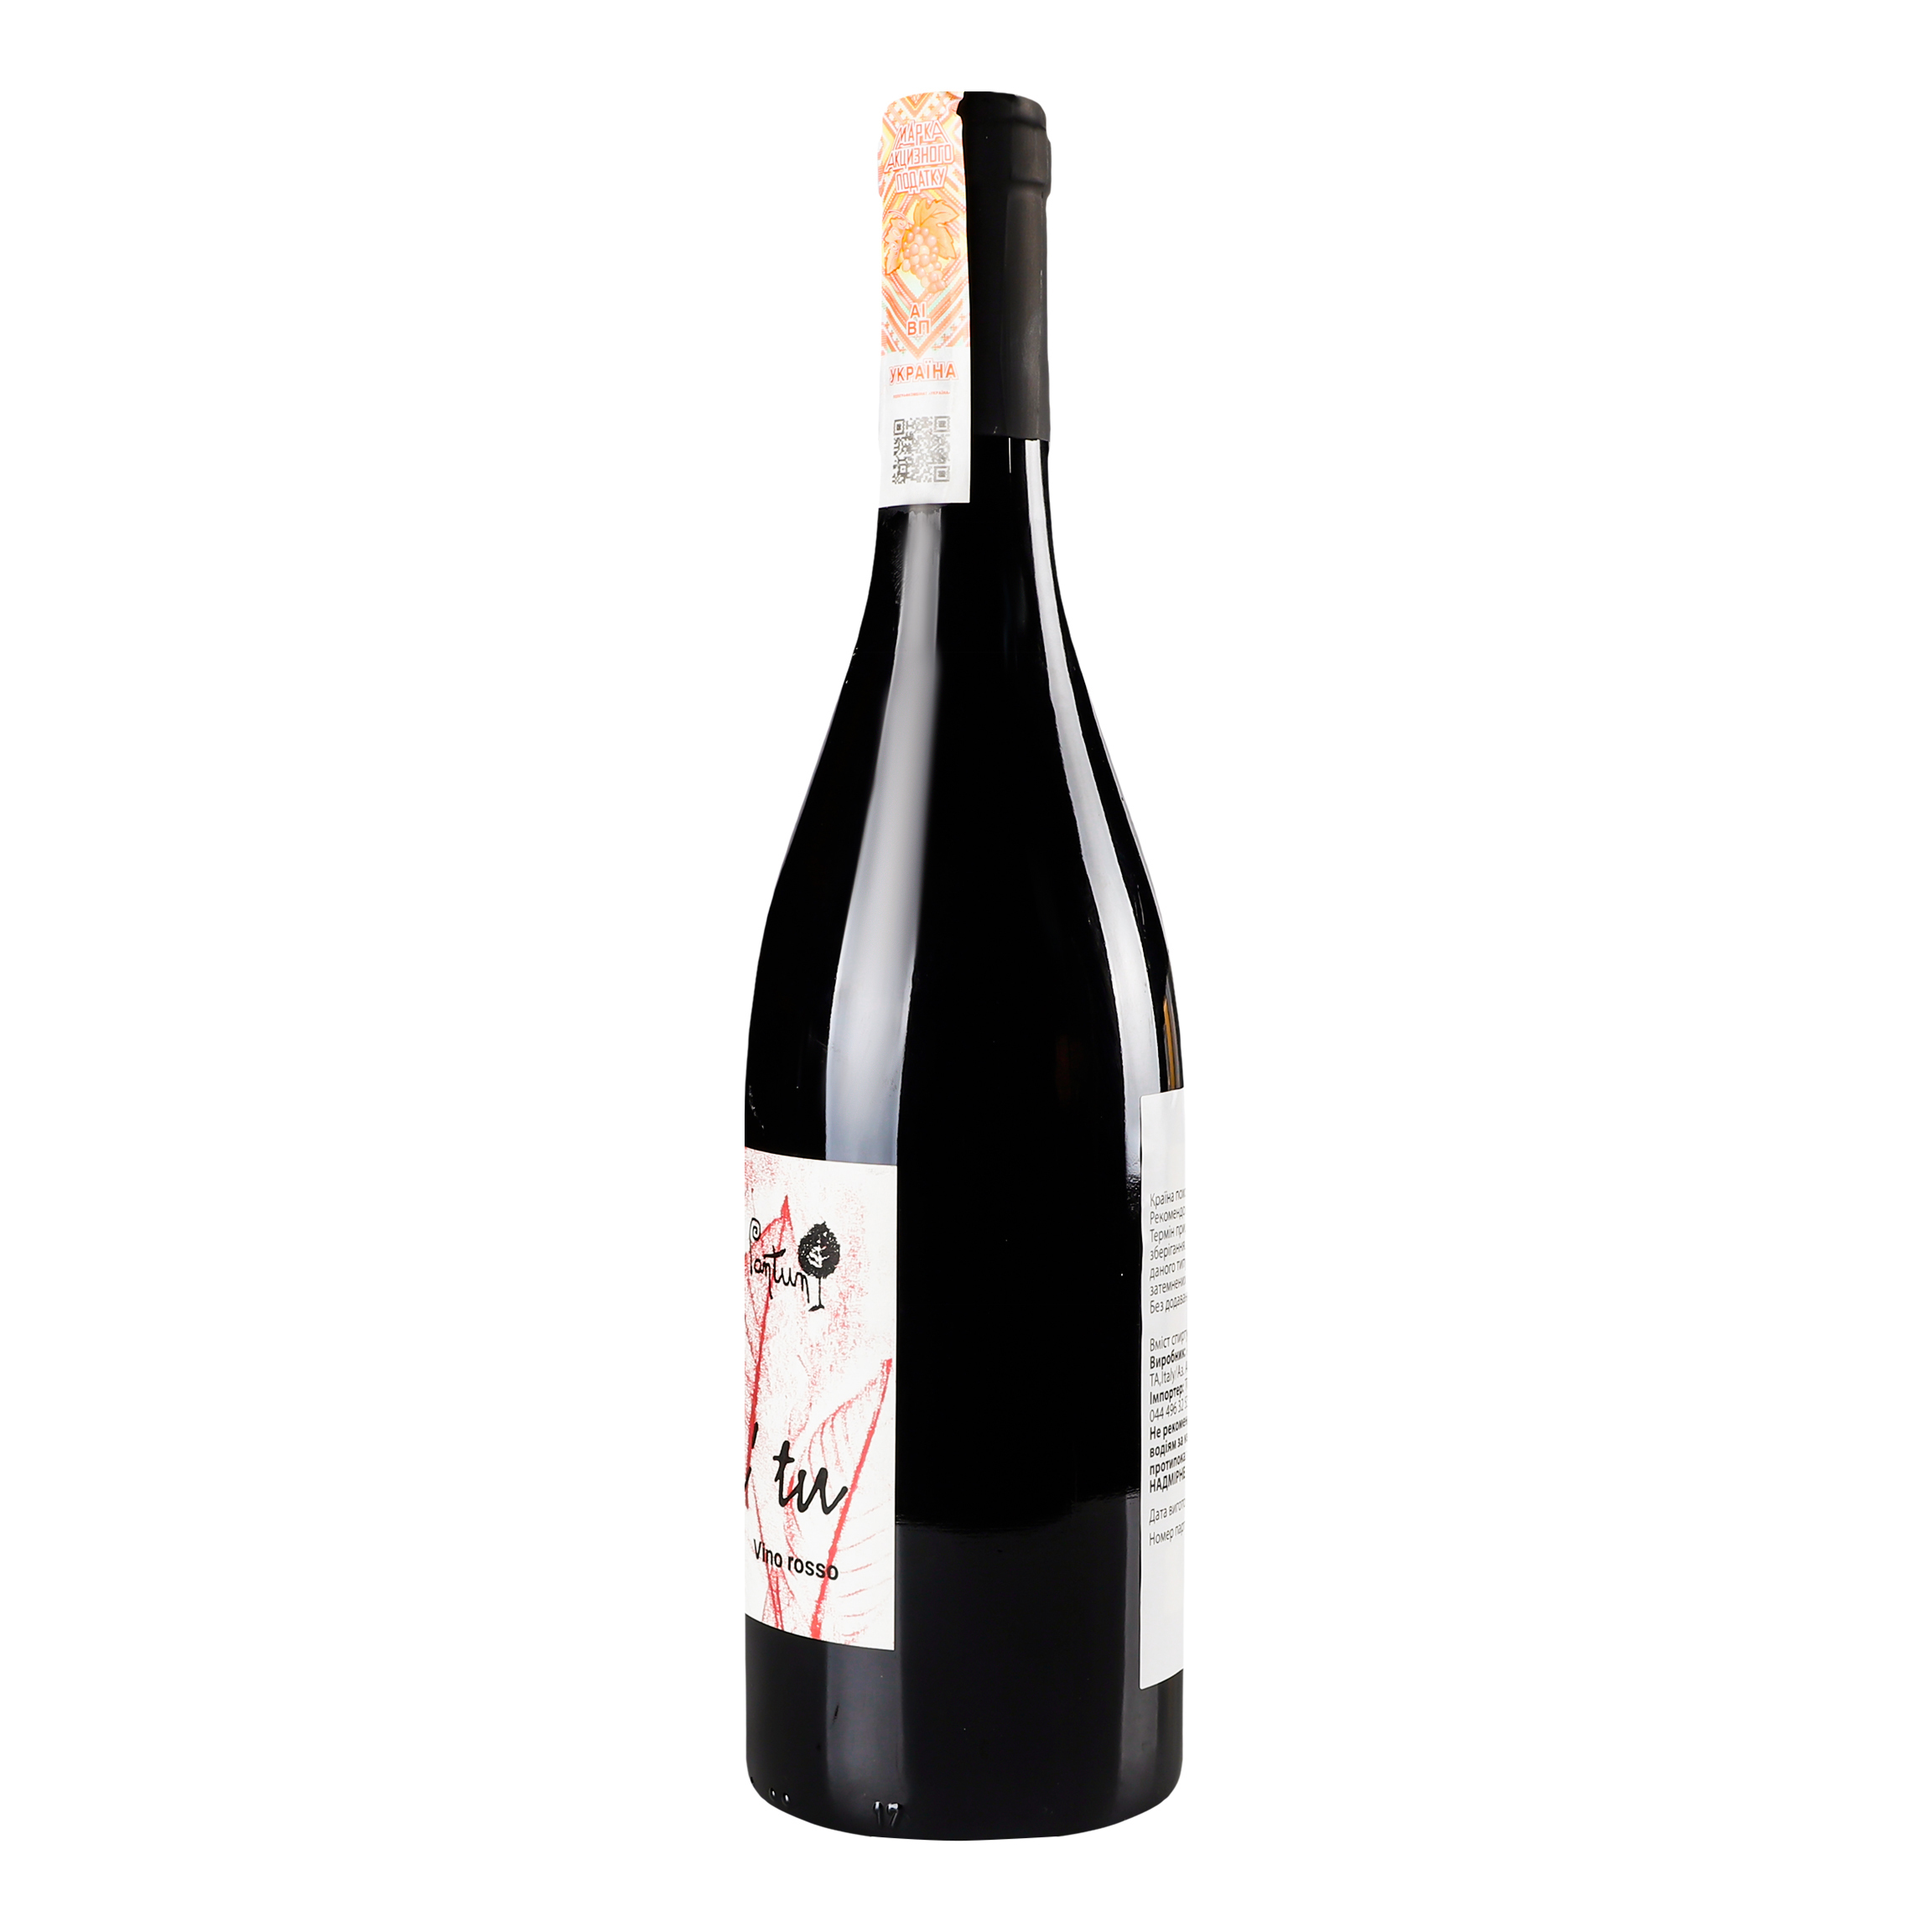 Вино Pantun Fai tu 2020 IGT, красное, сухое, 13,5%, 0,75 л (890270) - фото 2